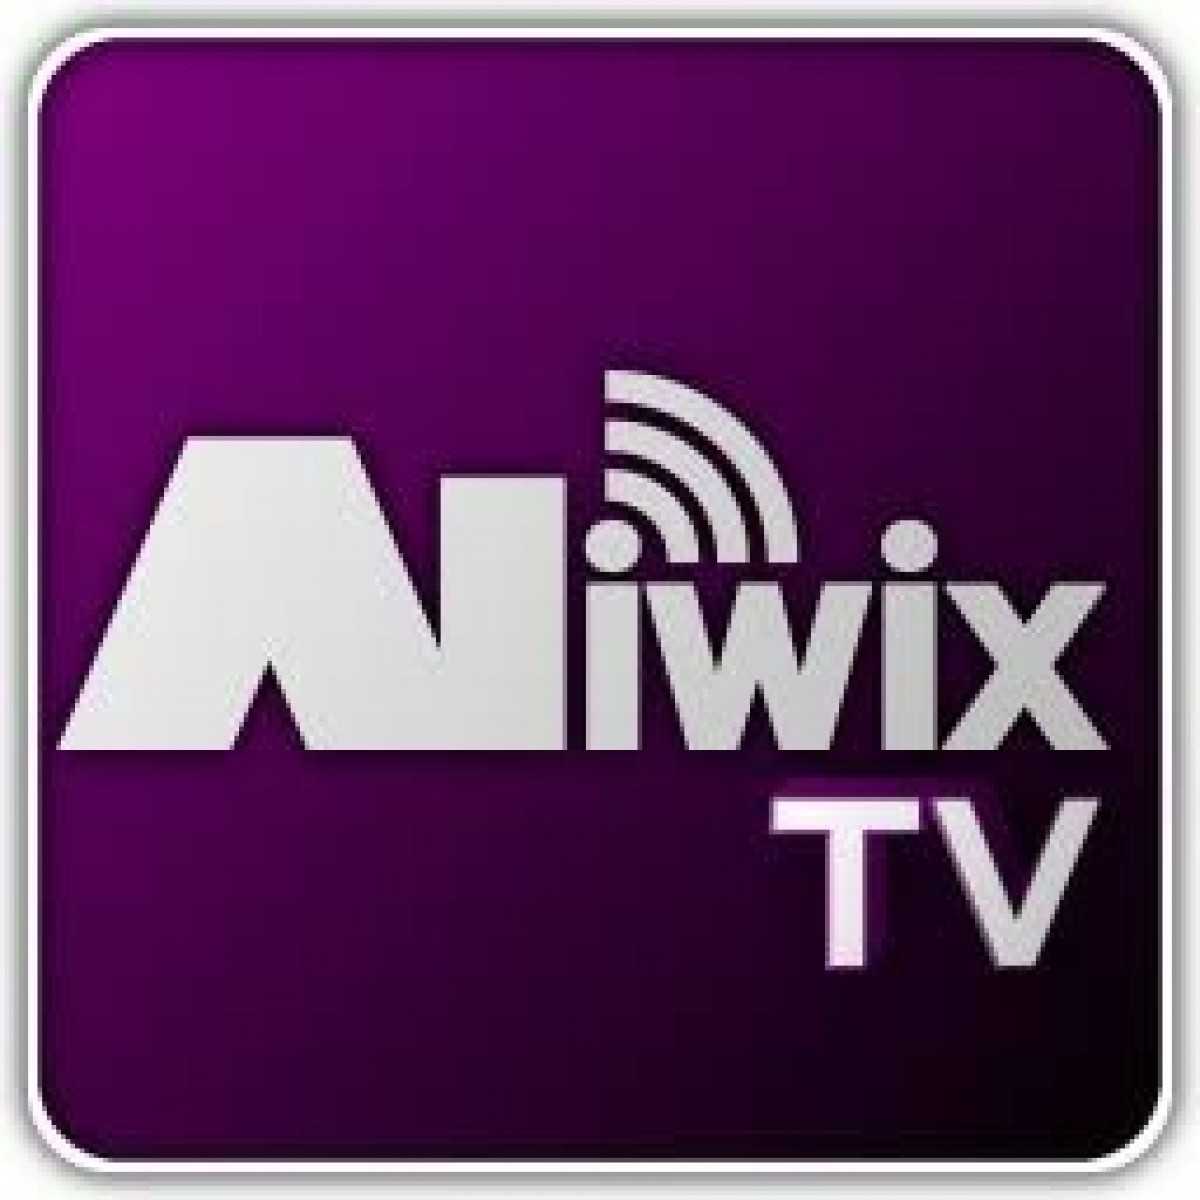 Aliwix TV – Live TV 3.2 (AdFree) Apk